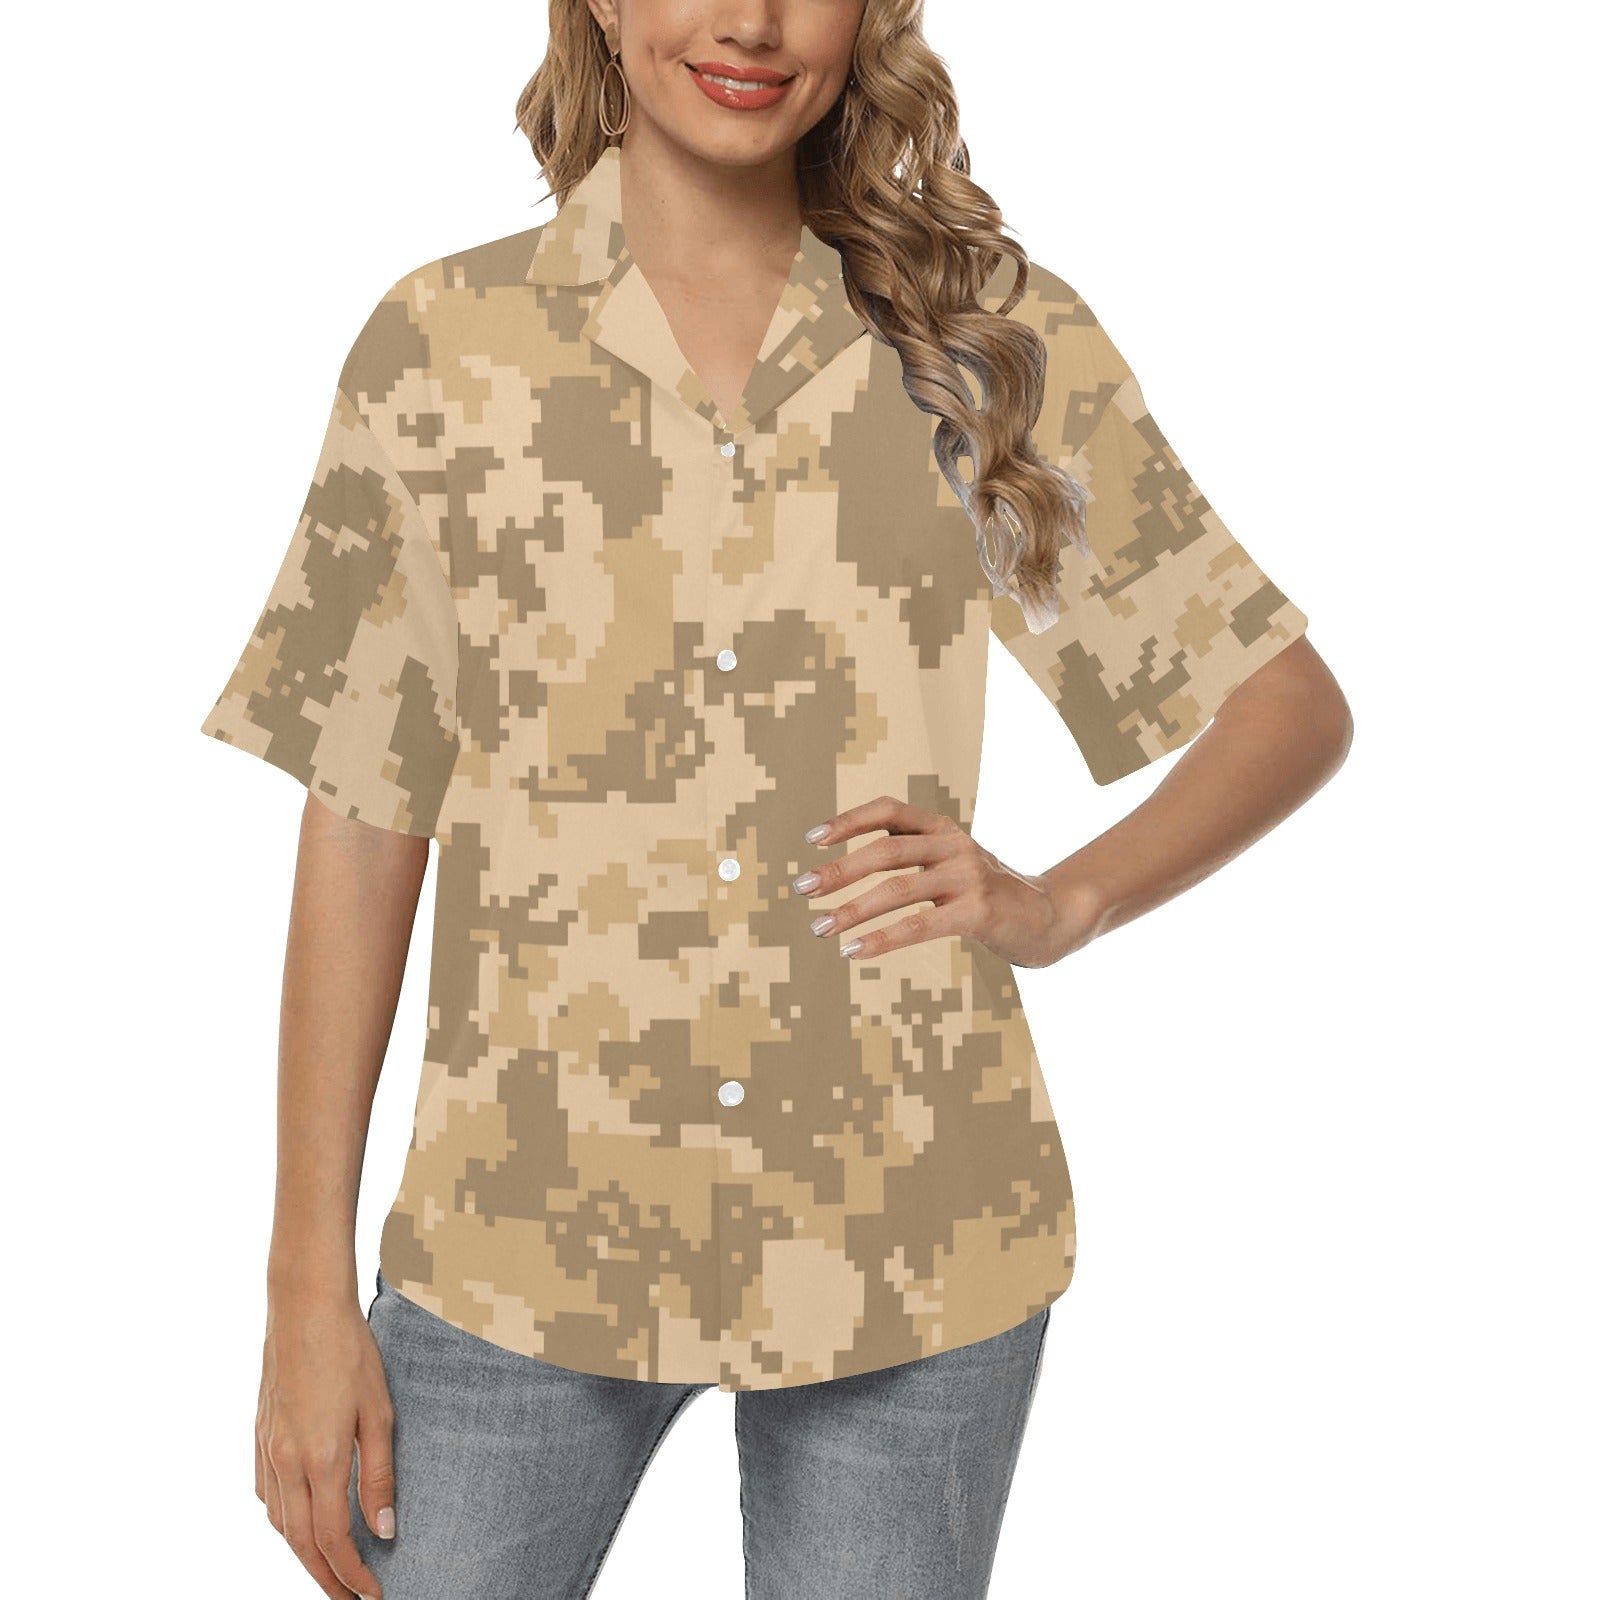 ACU Digital Desert Camouflage Women's Hawaiian Shirt